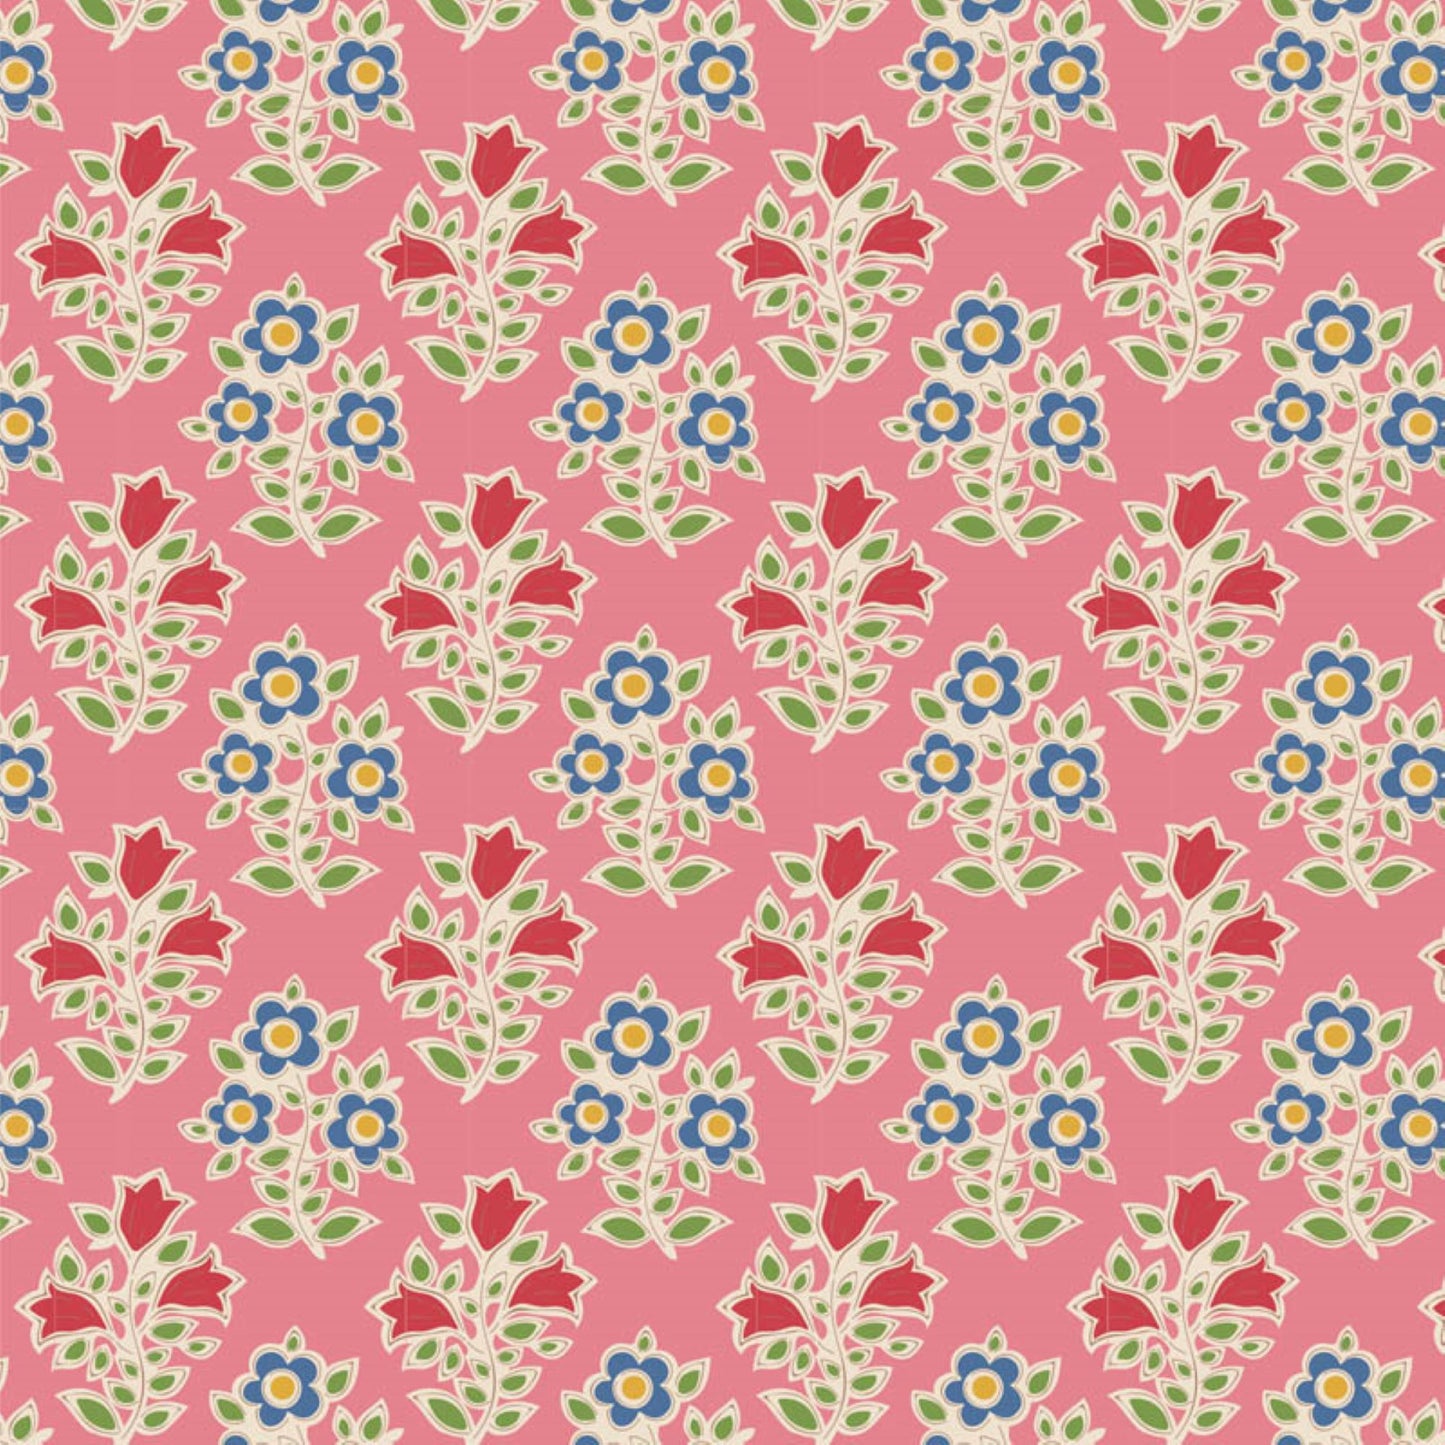 Tilda Farm Flowers pink floral cotton quilt fabric by the fat quarter